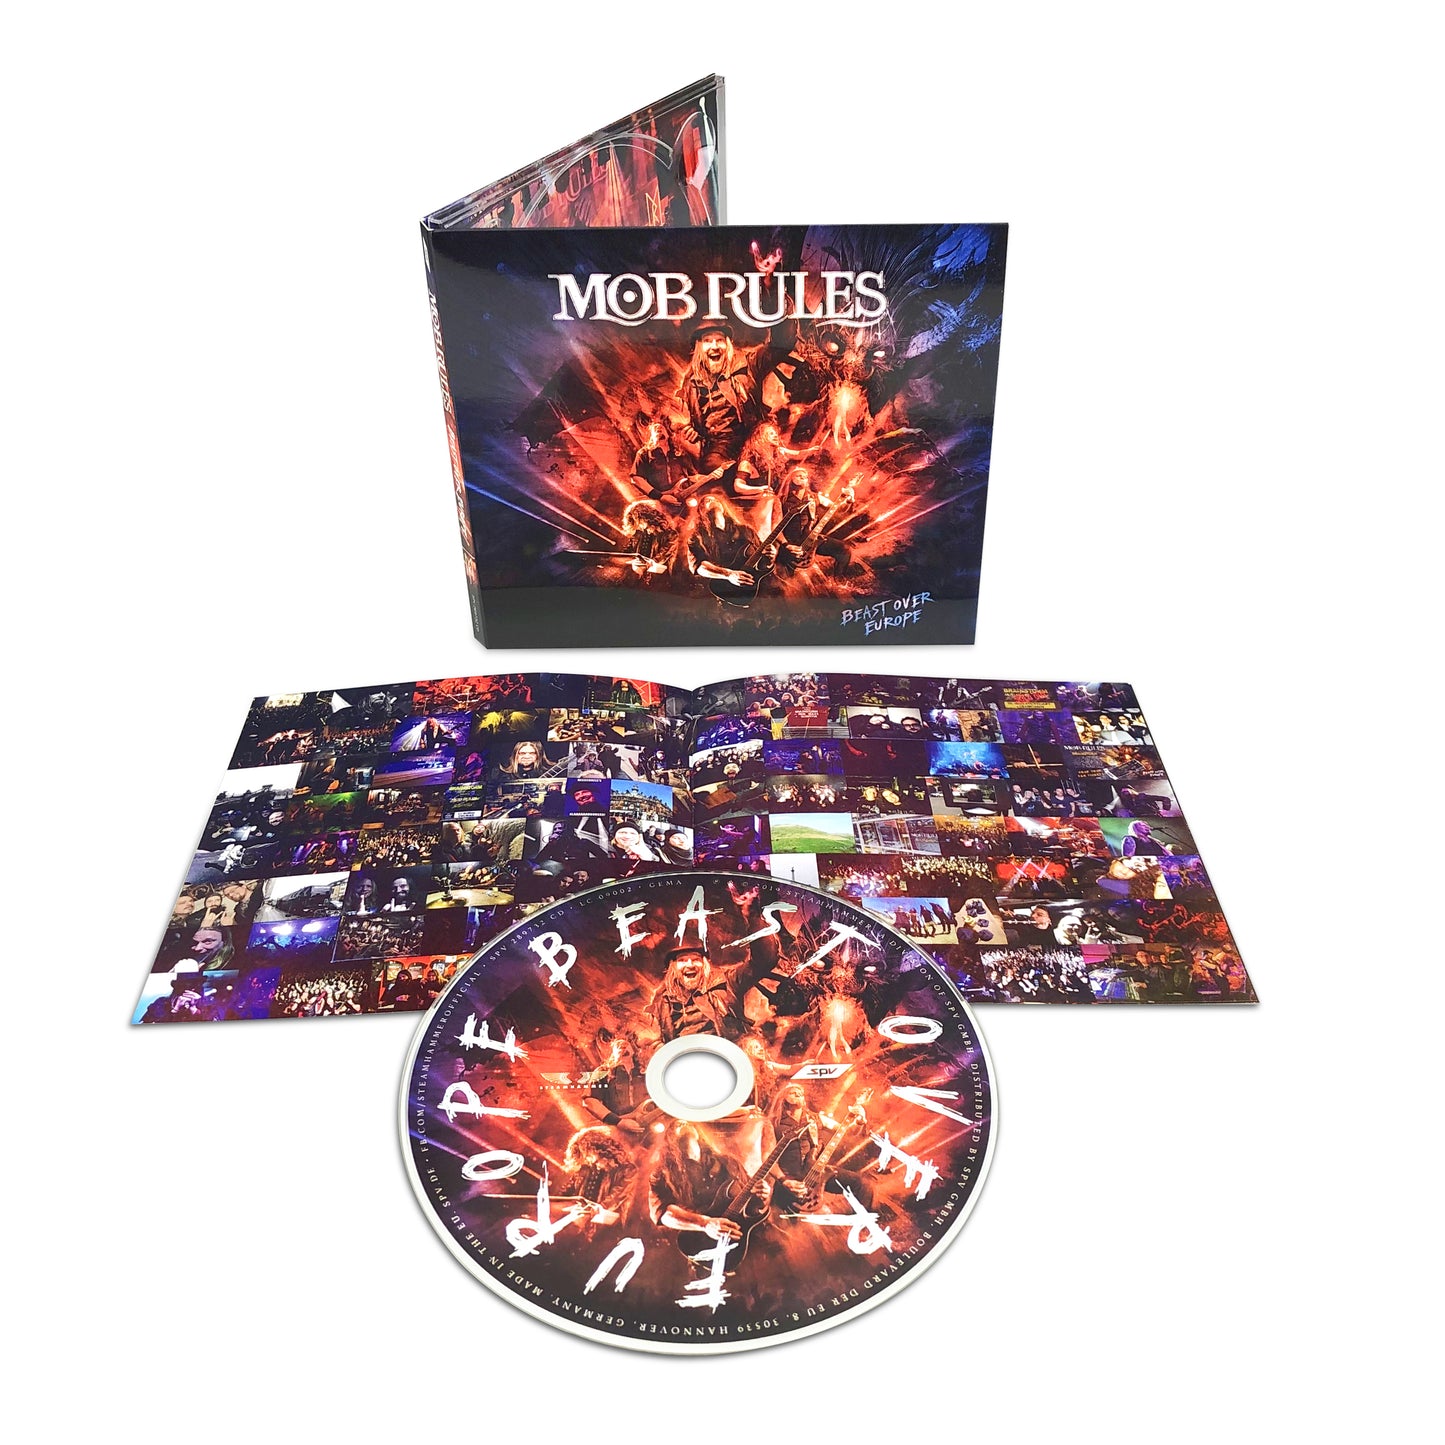 Mob Rules "Beast Over Europe" CD